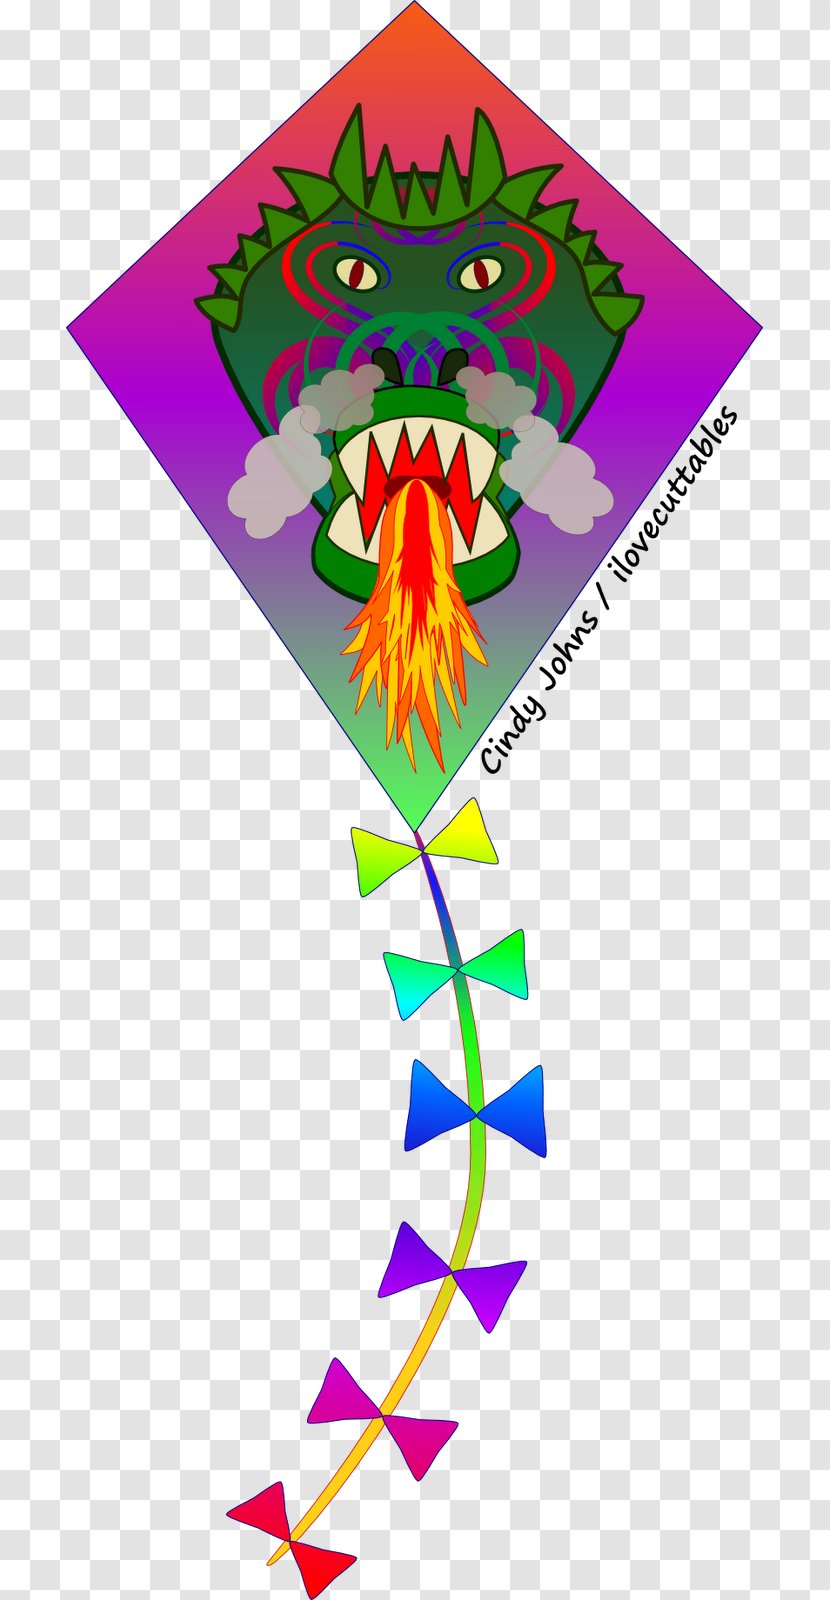 Graphic Design Art - Triangle - Cartoon Kite Transparent PNG